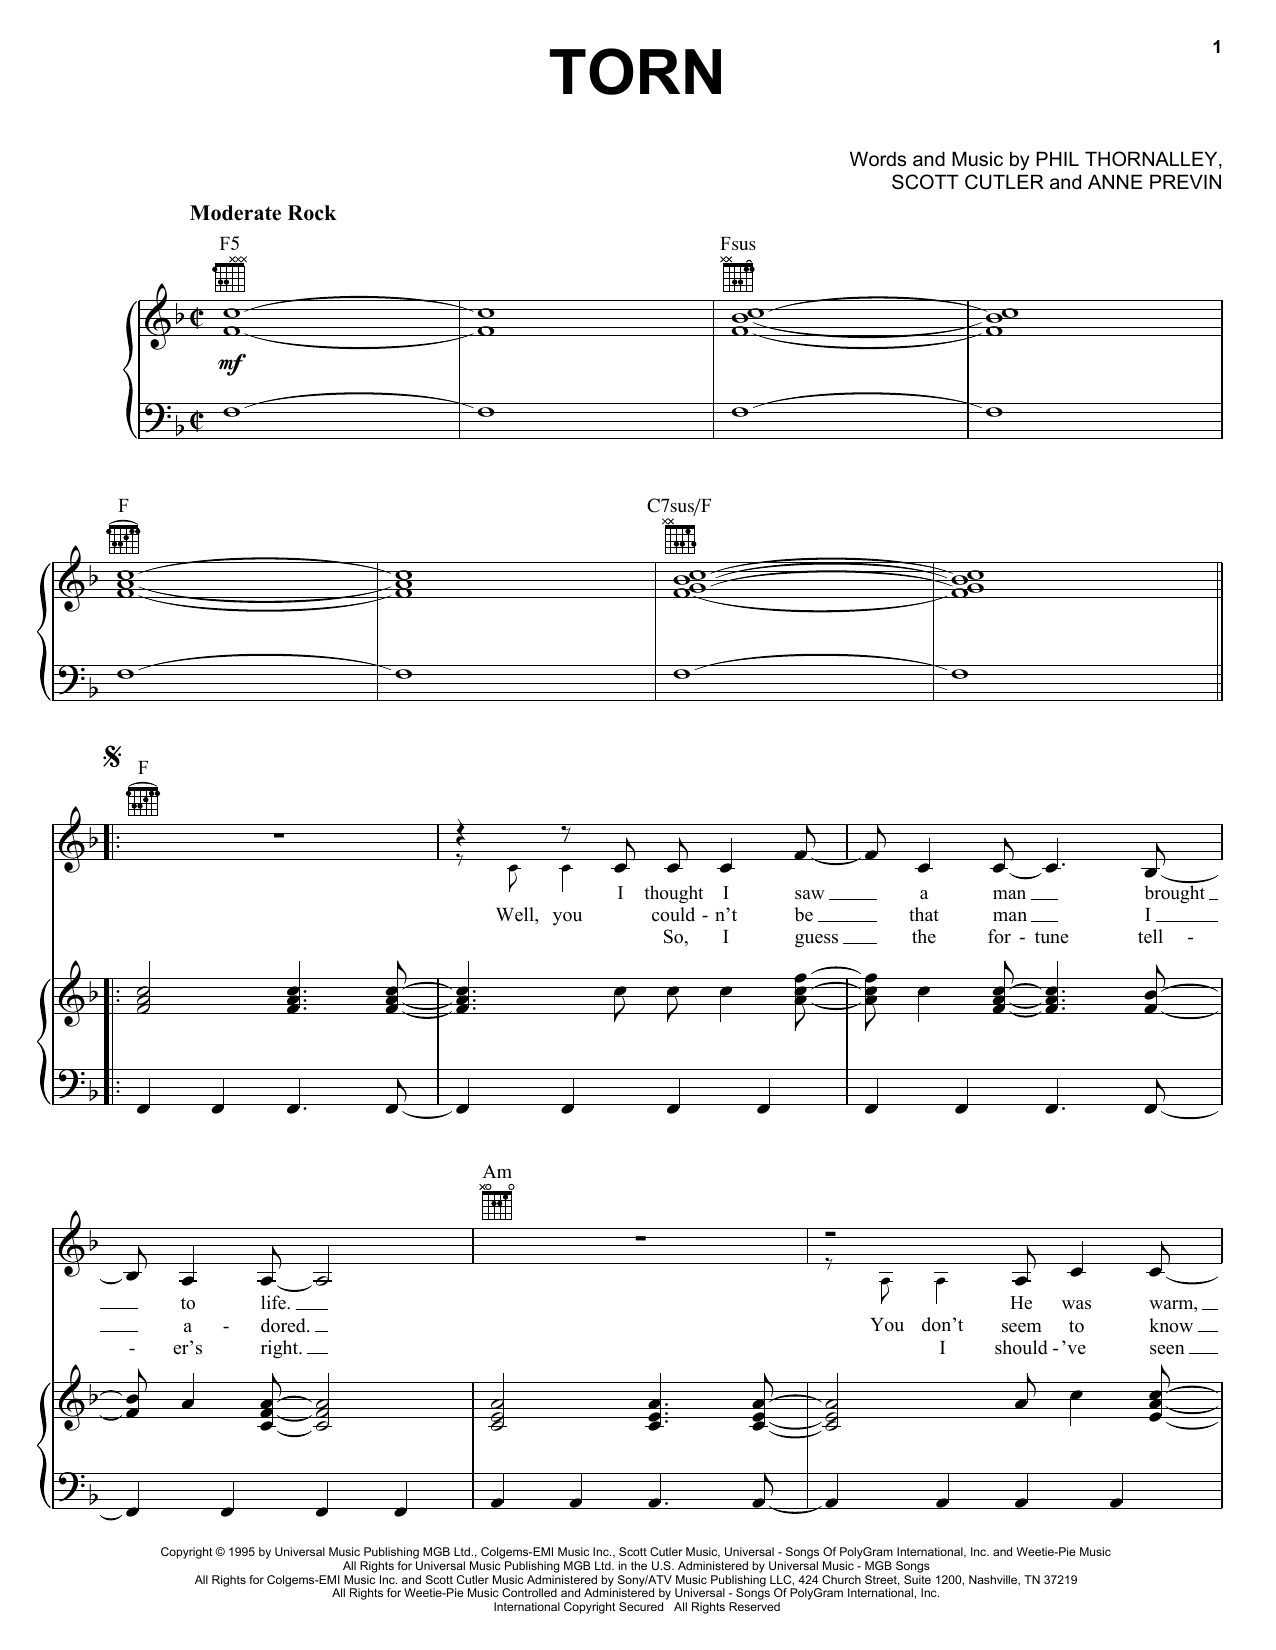 Natalie Imbruglia Torn Sheet Music Notes & Chords for Flute - Download or Print PDF